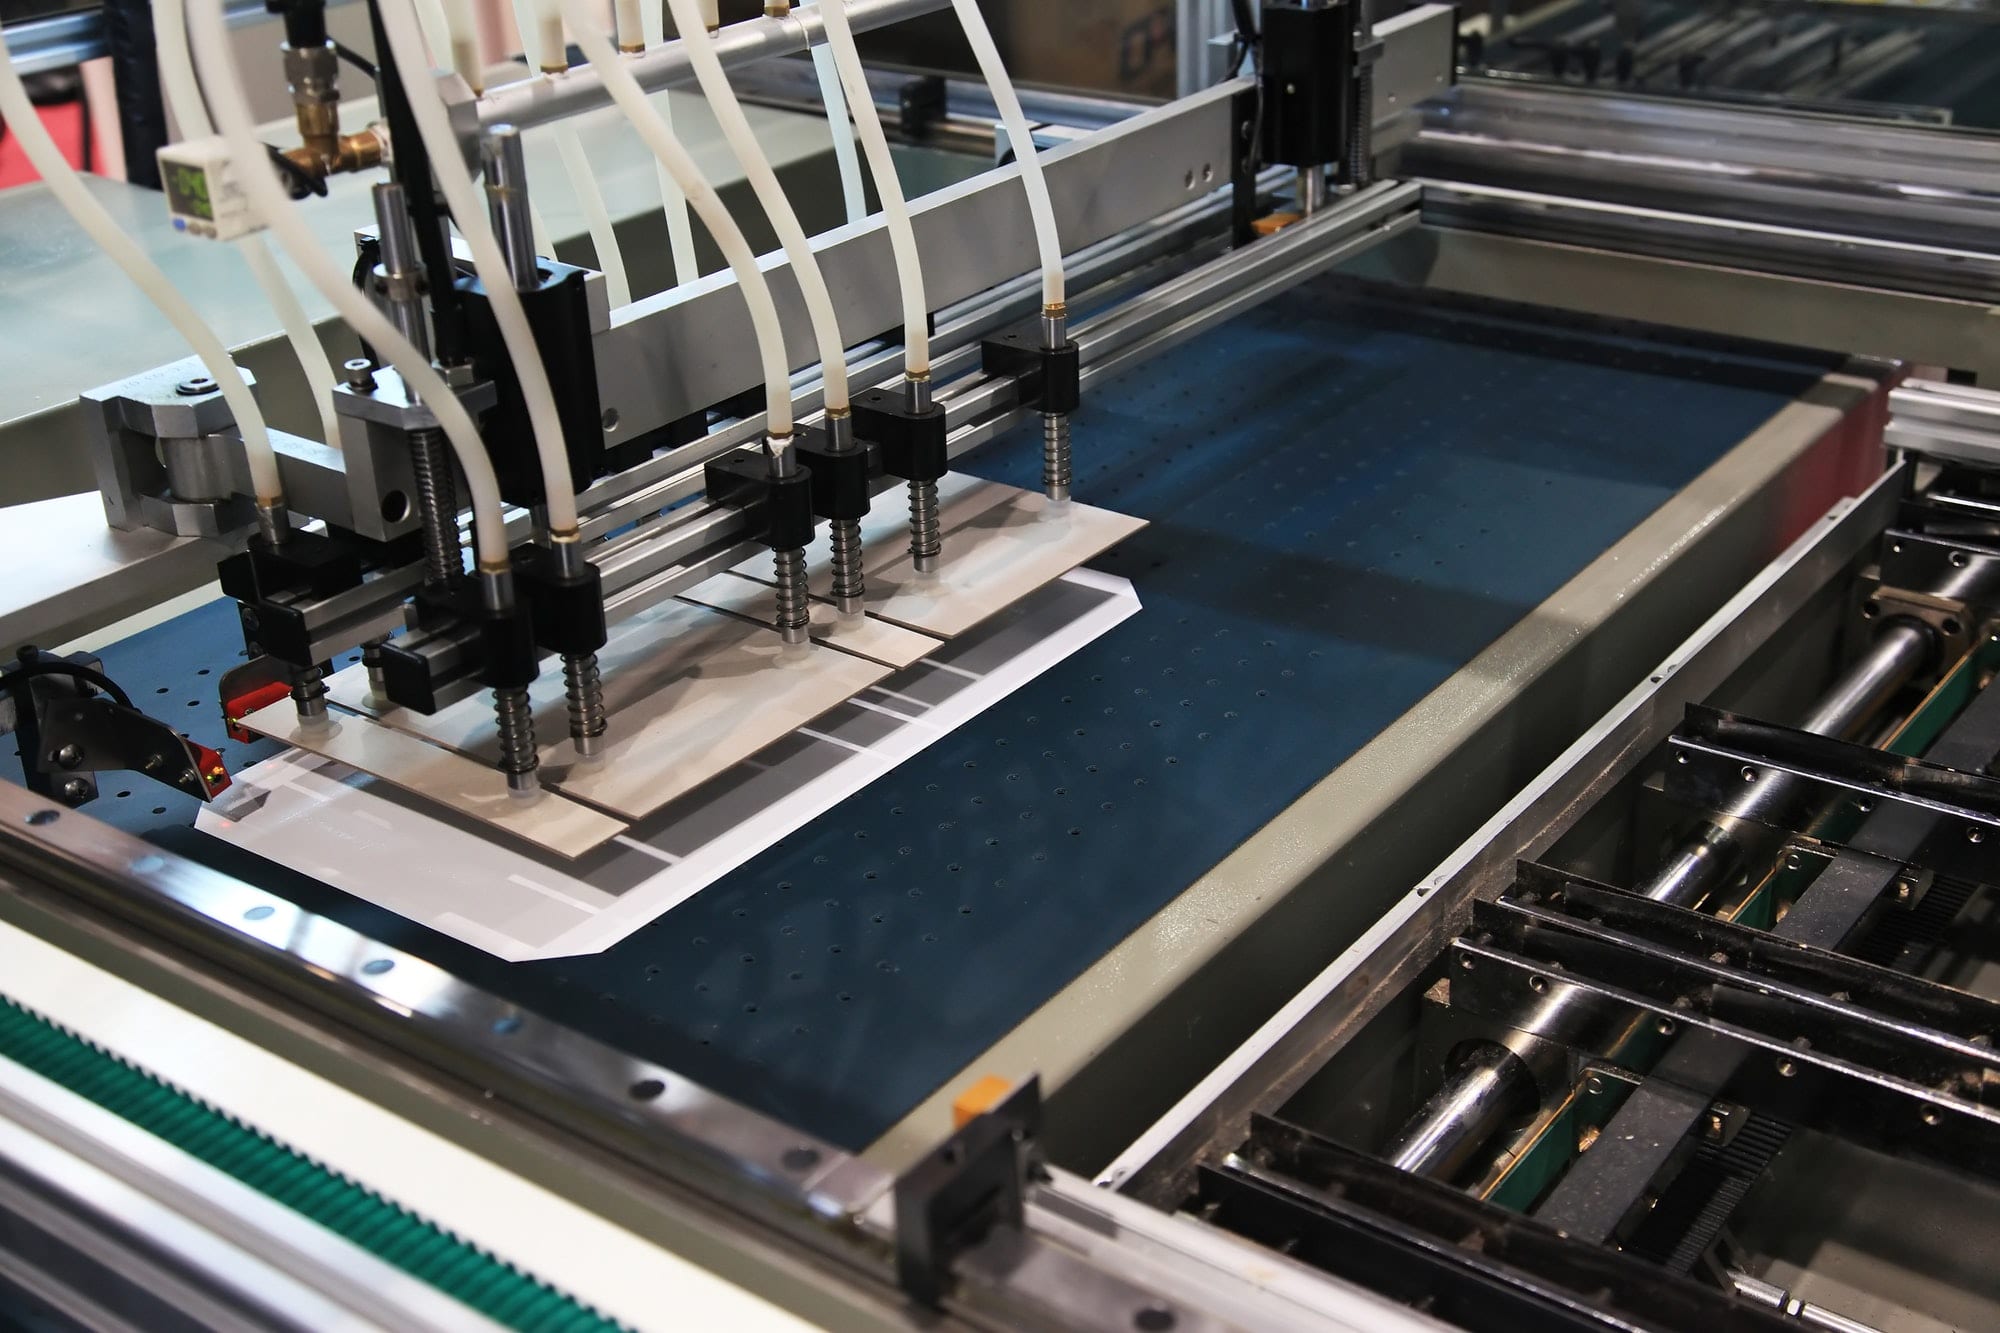 Printing industry equipment